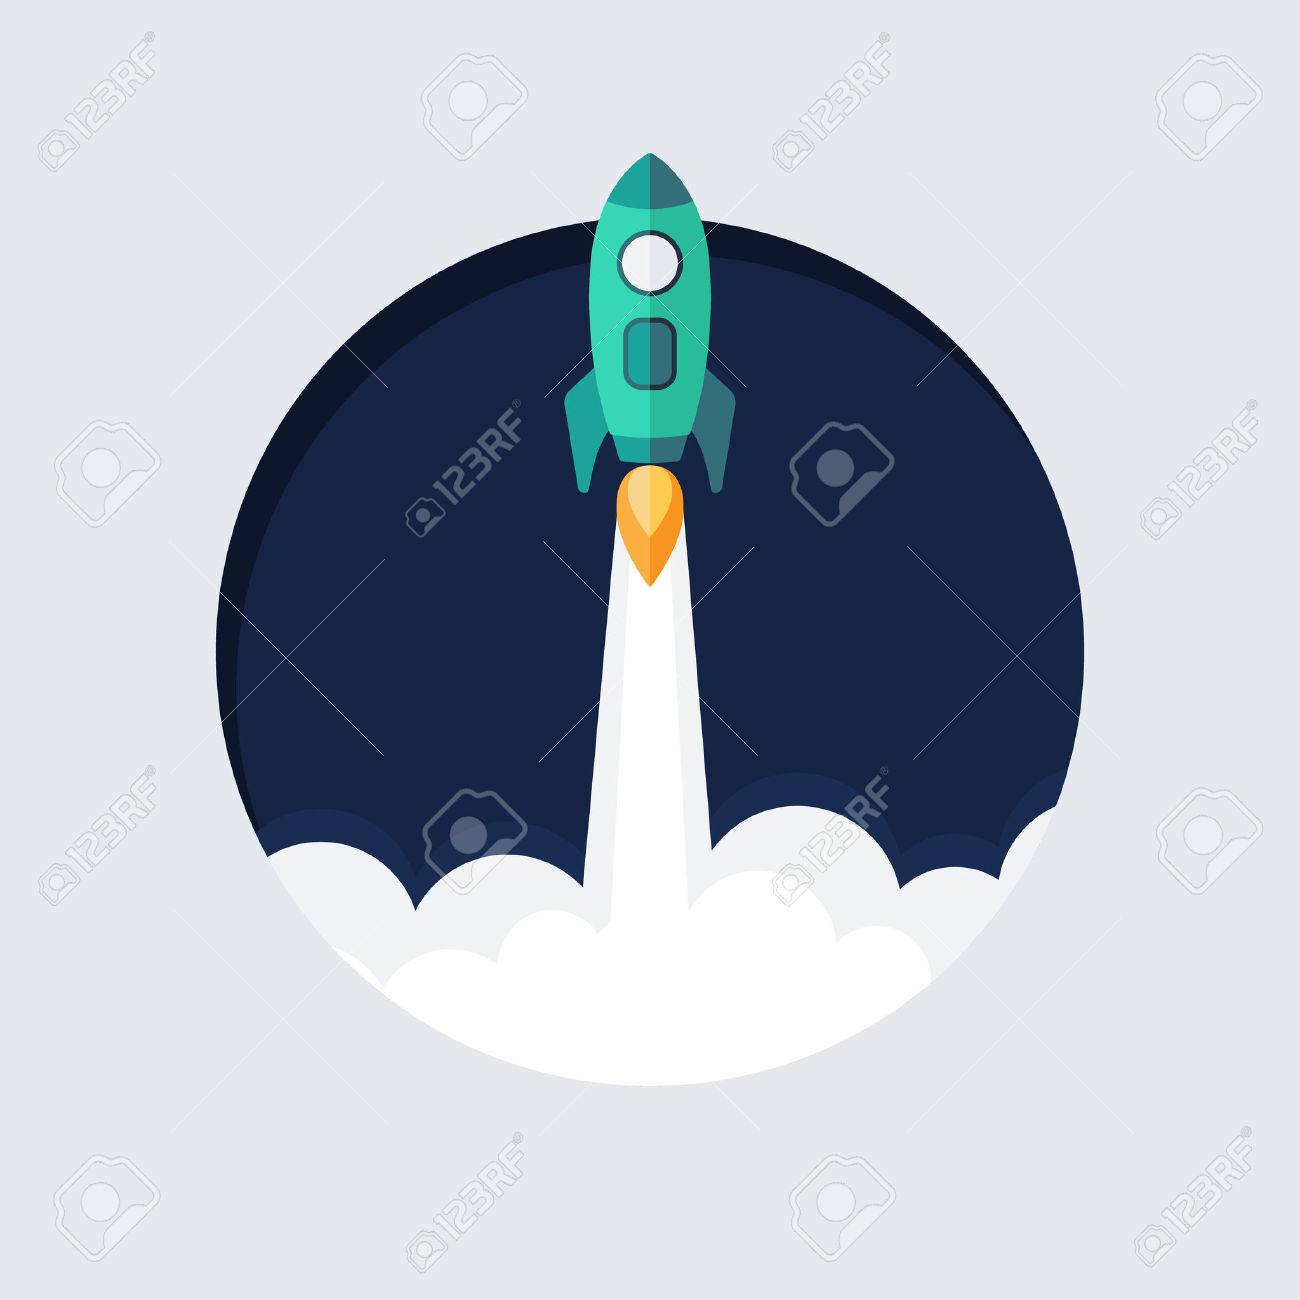 Rocket Icon - rocket png download - 512*512 - Free Transparent 